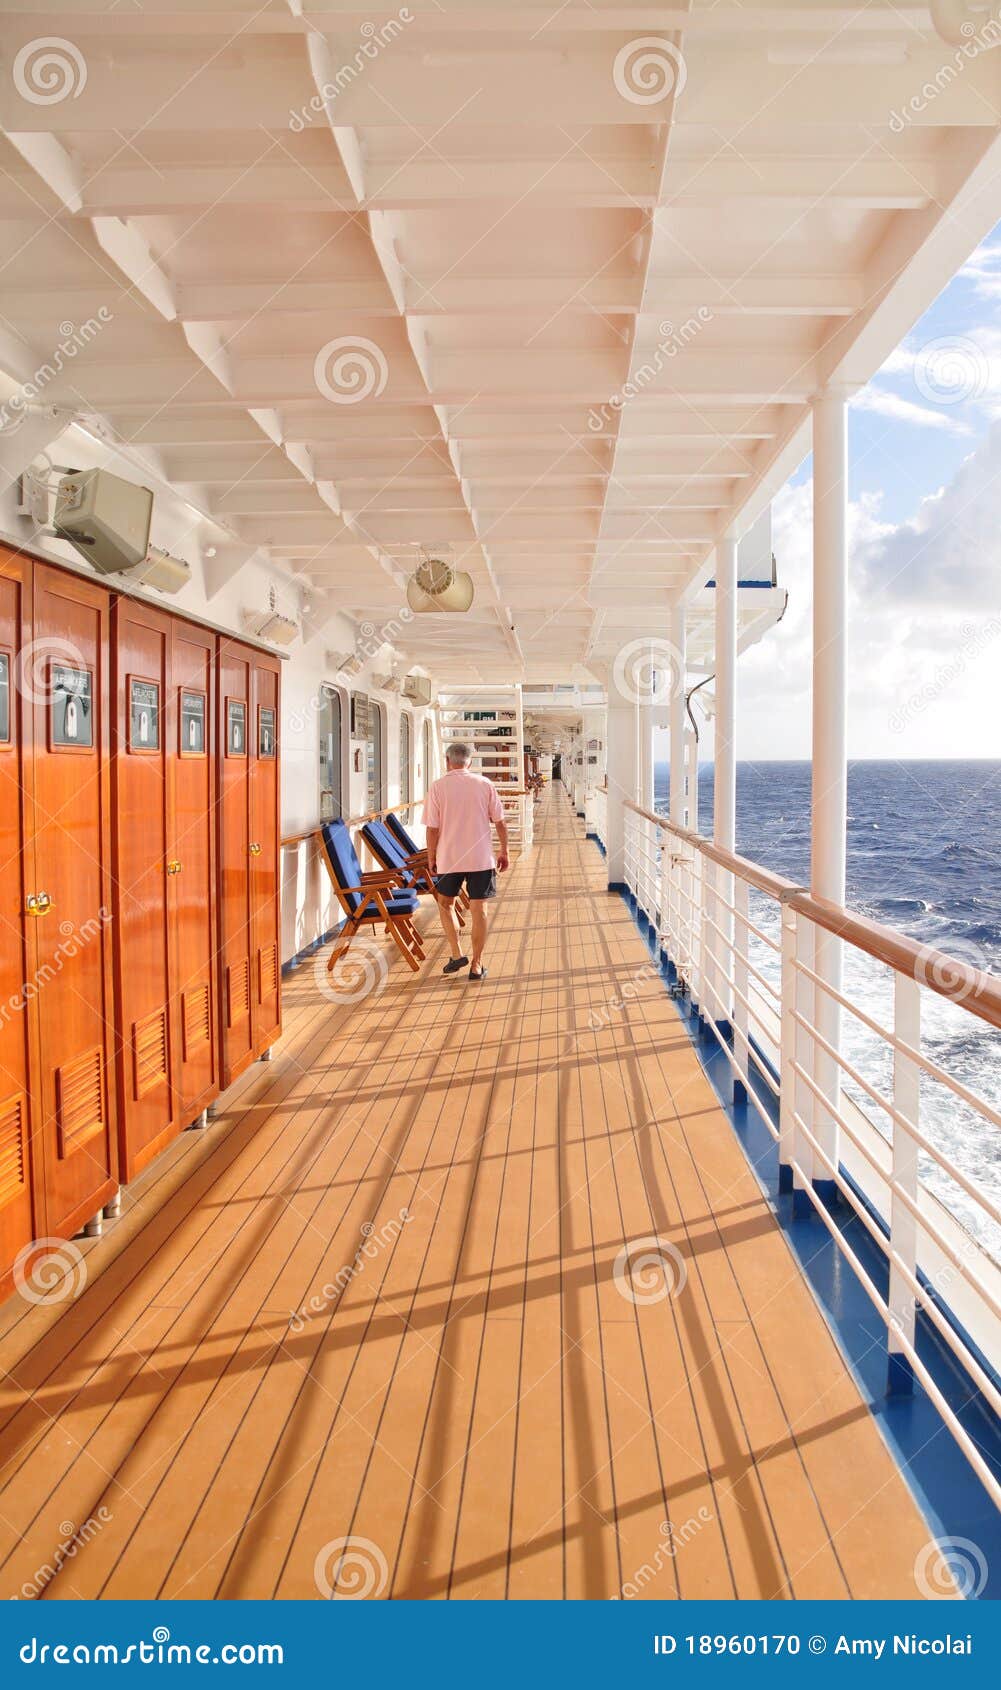 cruise ship promenade deck